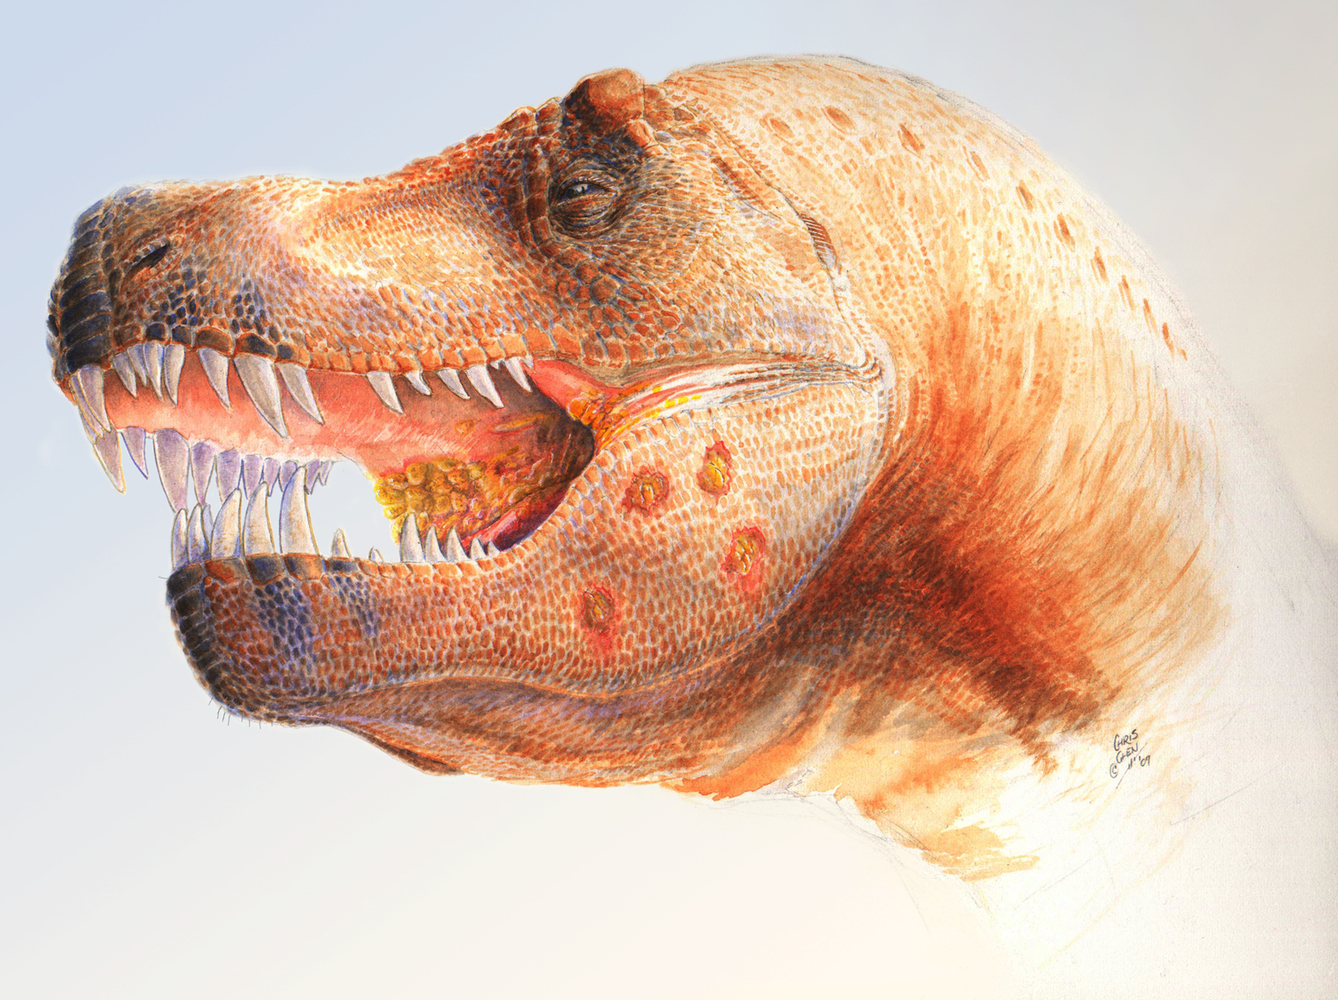 Trichomonas-like infection of T. rex